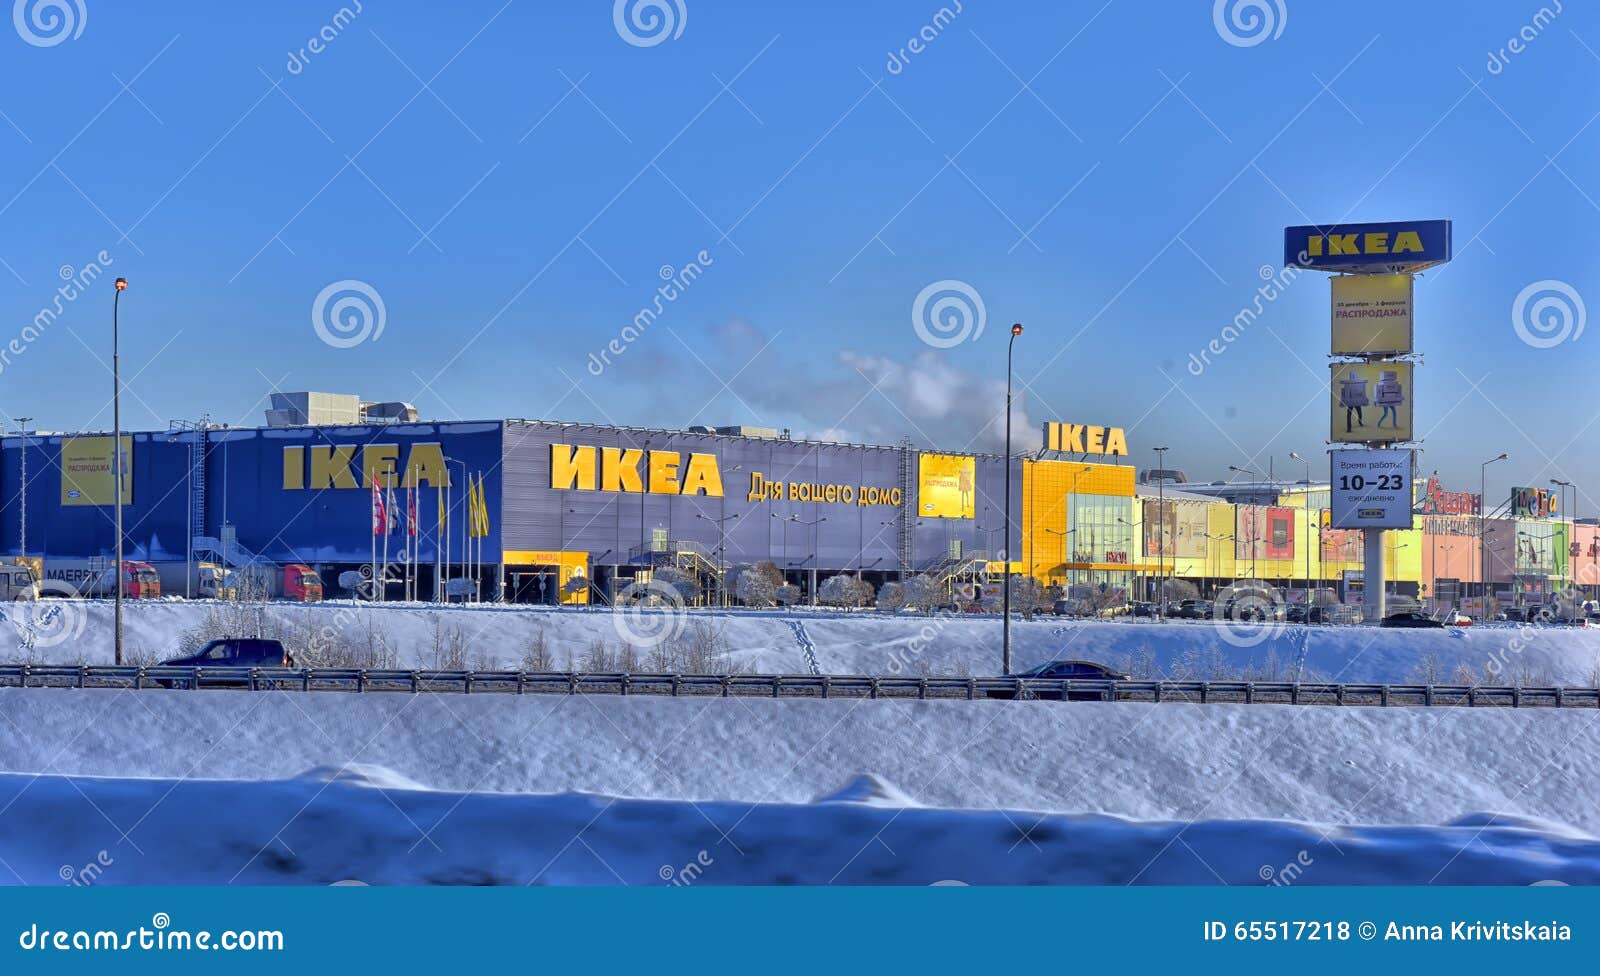 Gering Uitwisseling Spuug uit IKEA stores in winter editorial stock photo. Image of store - 65517218